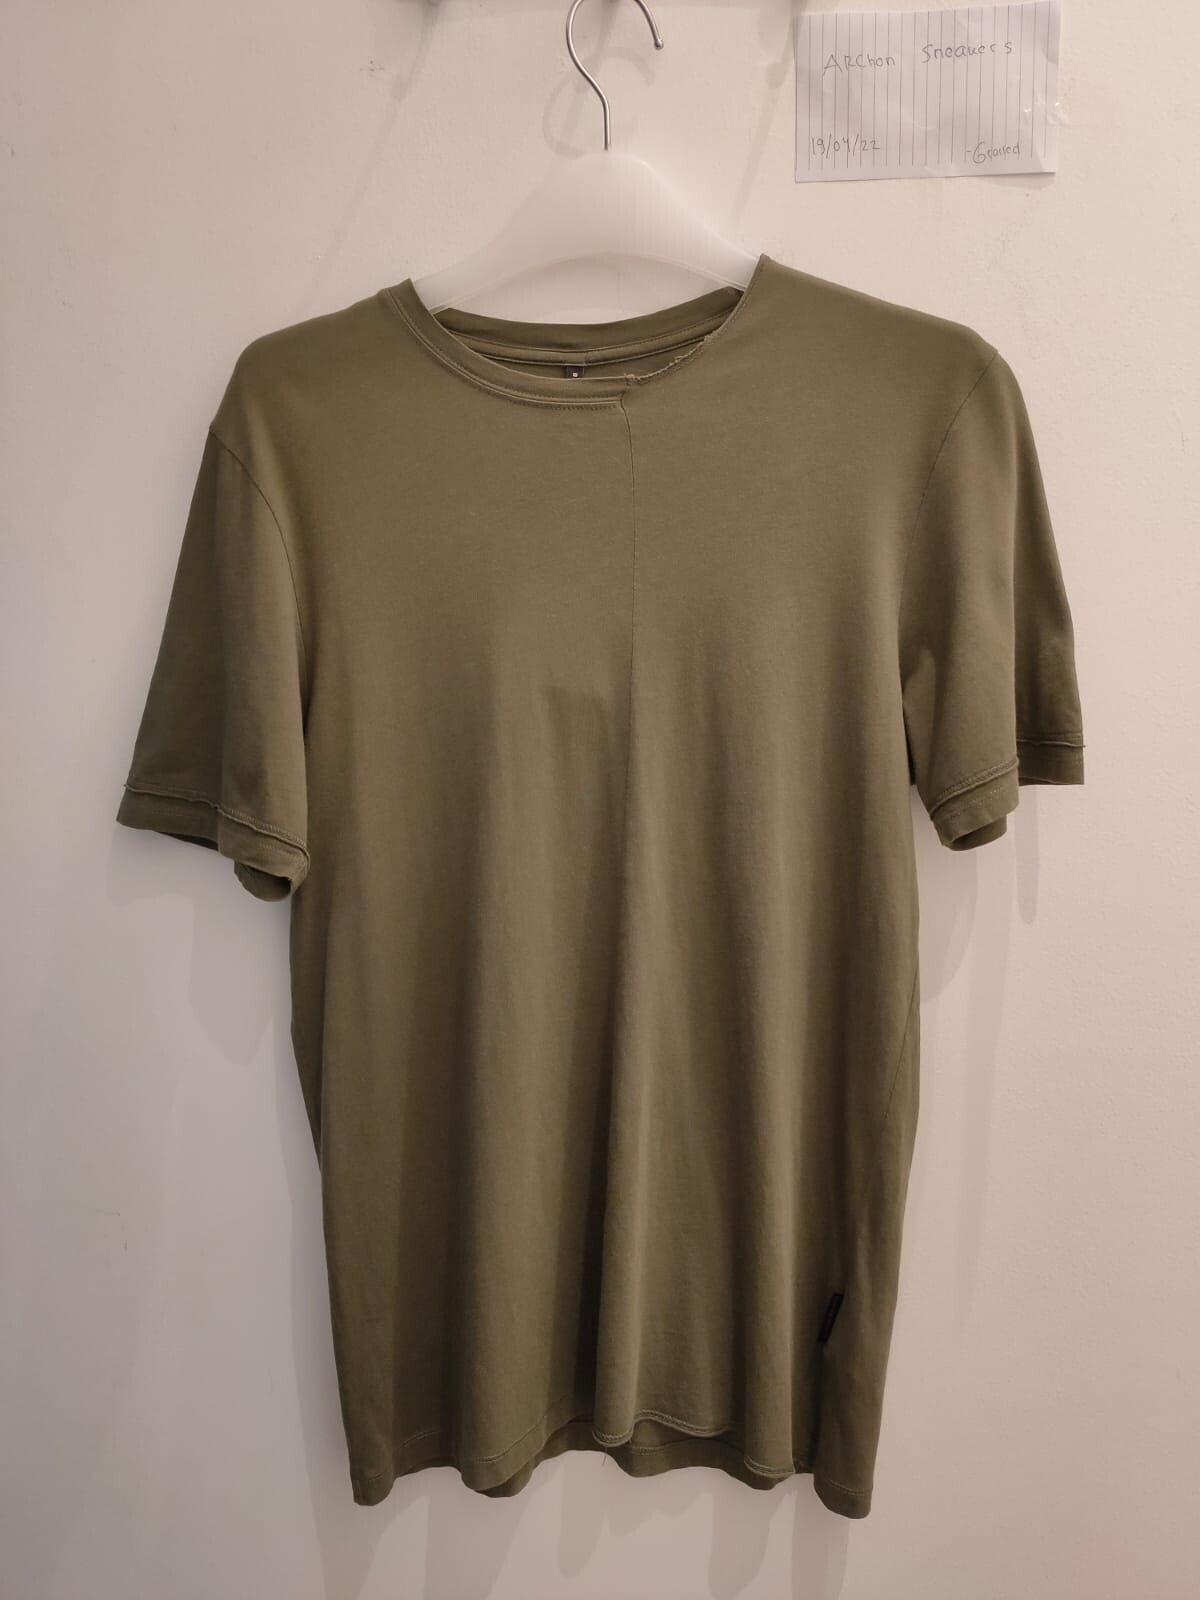 Vintage Blackbarrett Olive T-Shirt Size US S / EU 44-46 / 1 - 1 Preview